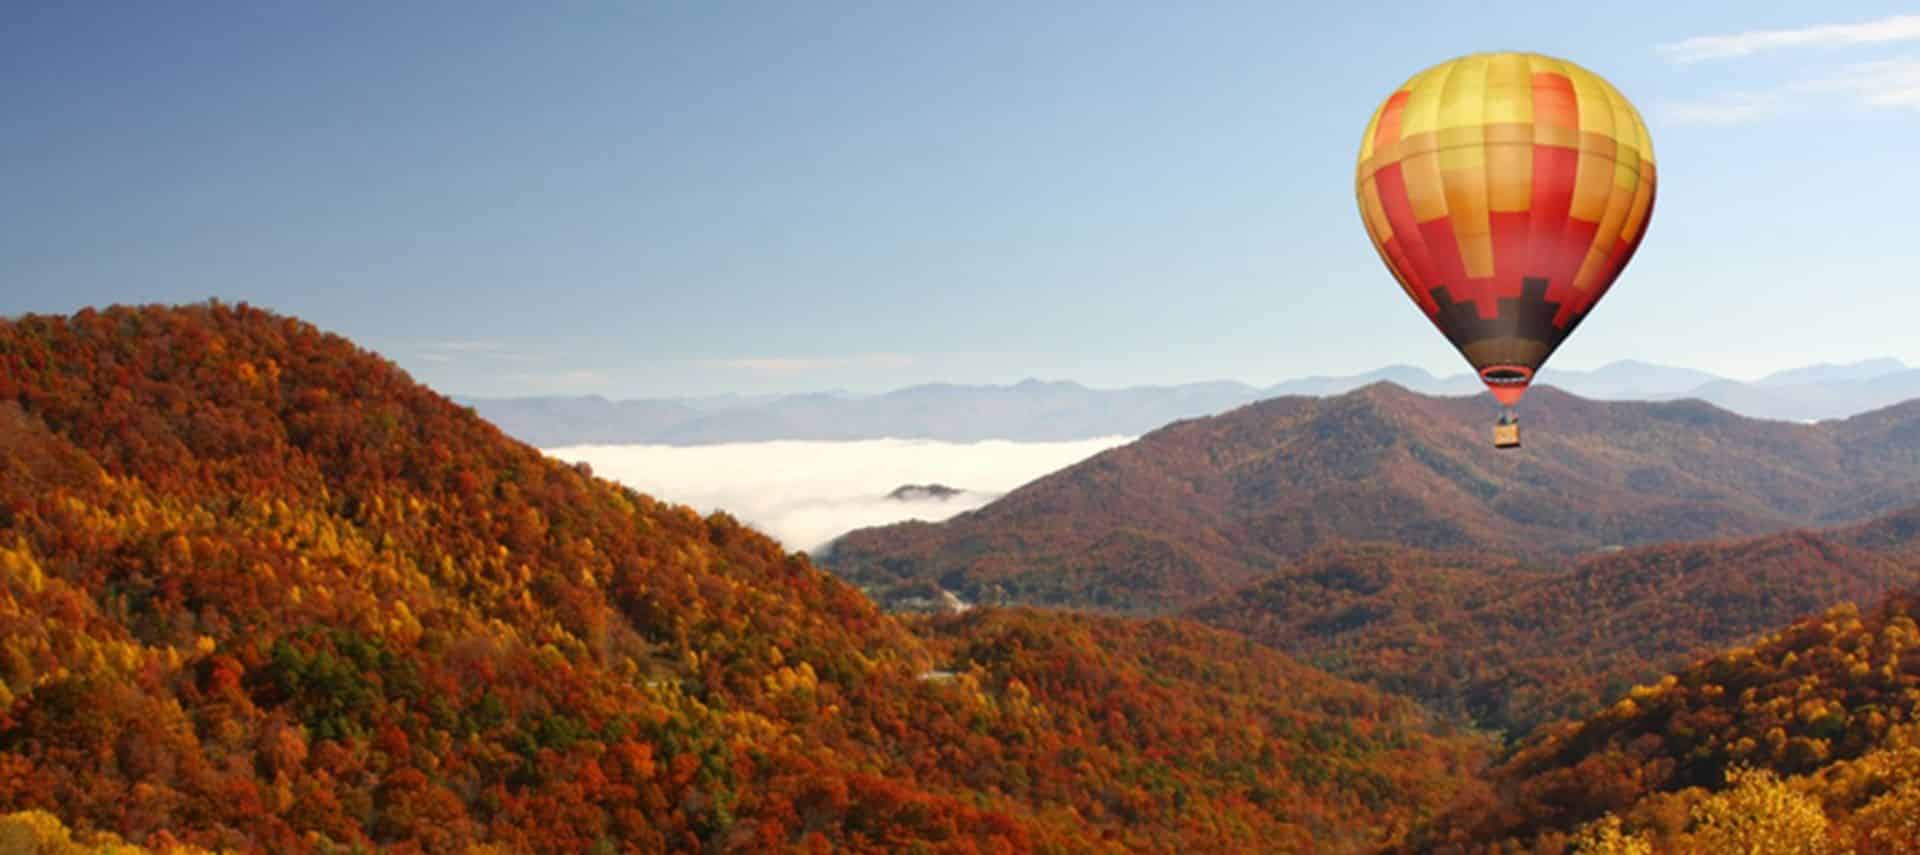 Hot air balloon drifting over fall foliage in mountains